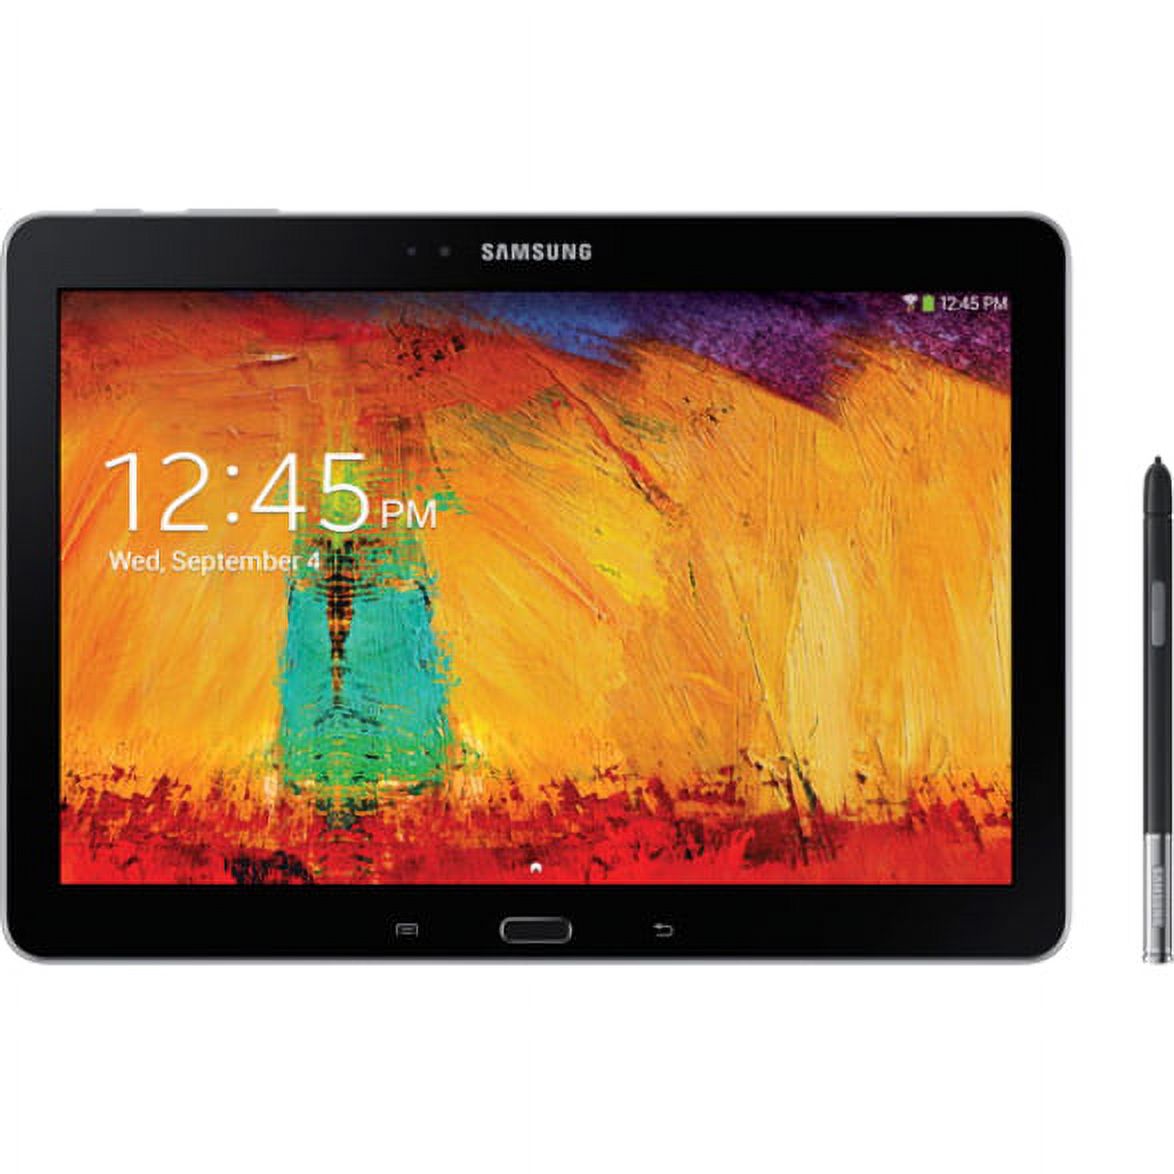 Samsung Galaxy Note 10.1 tablet, SM-P6000ZKYXAR - image 1 of 5